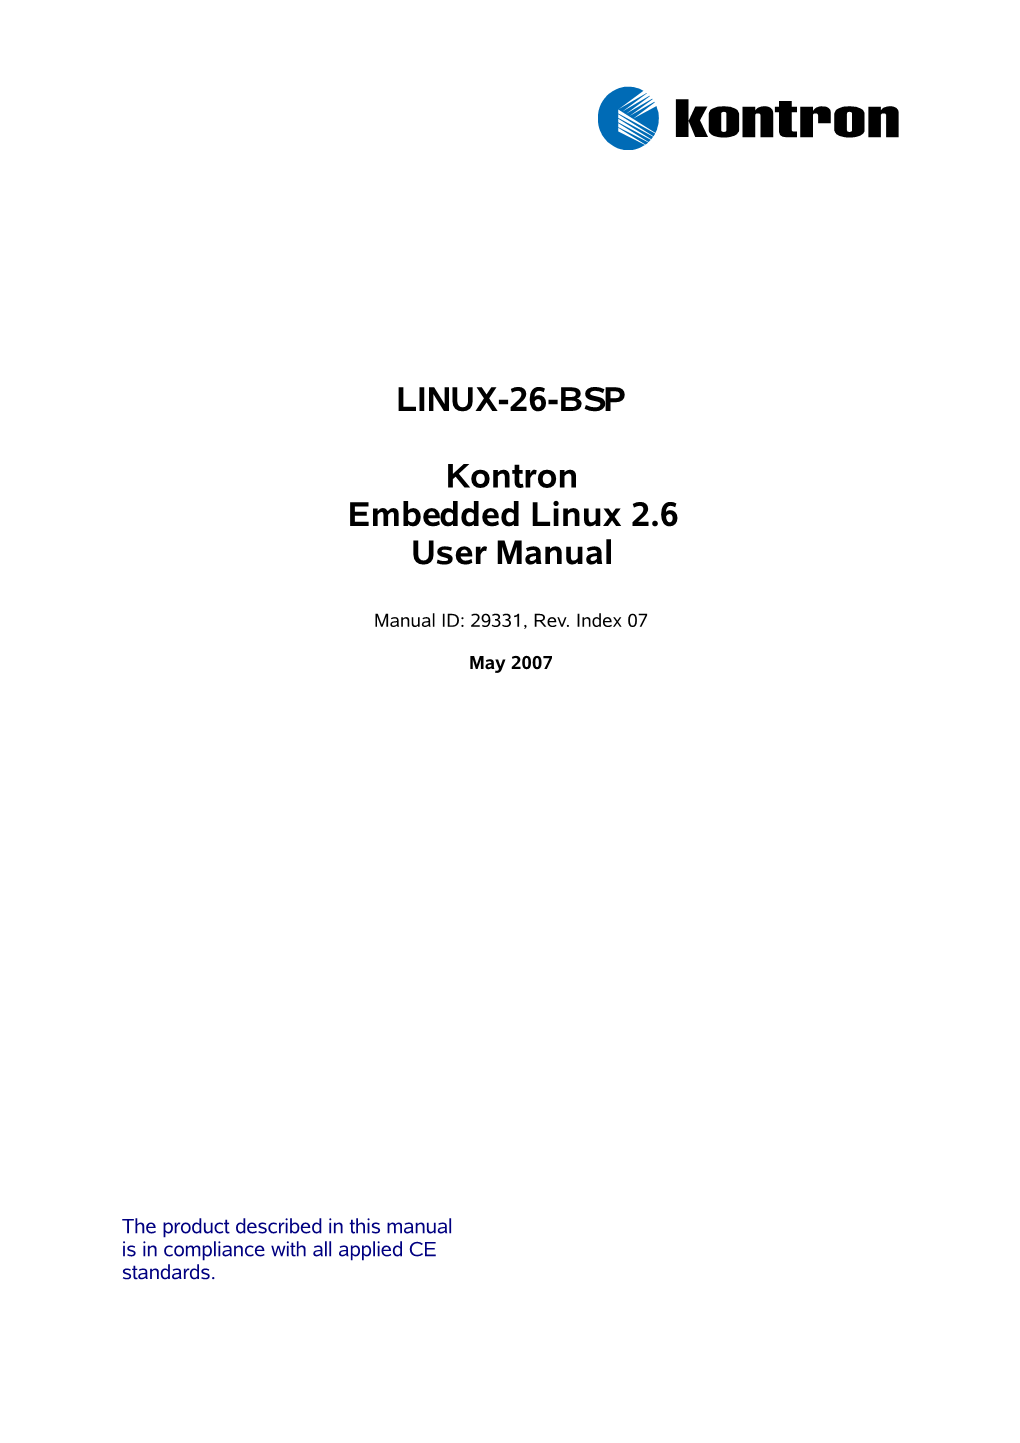 LINUX-26-BSP Kontron Embedded Linux 2.6 User Manual